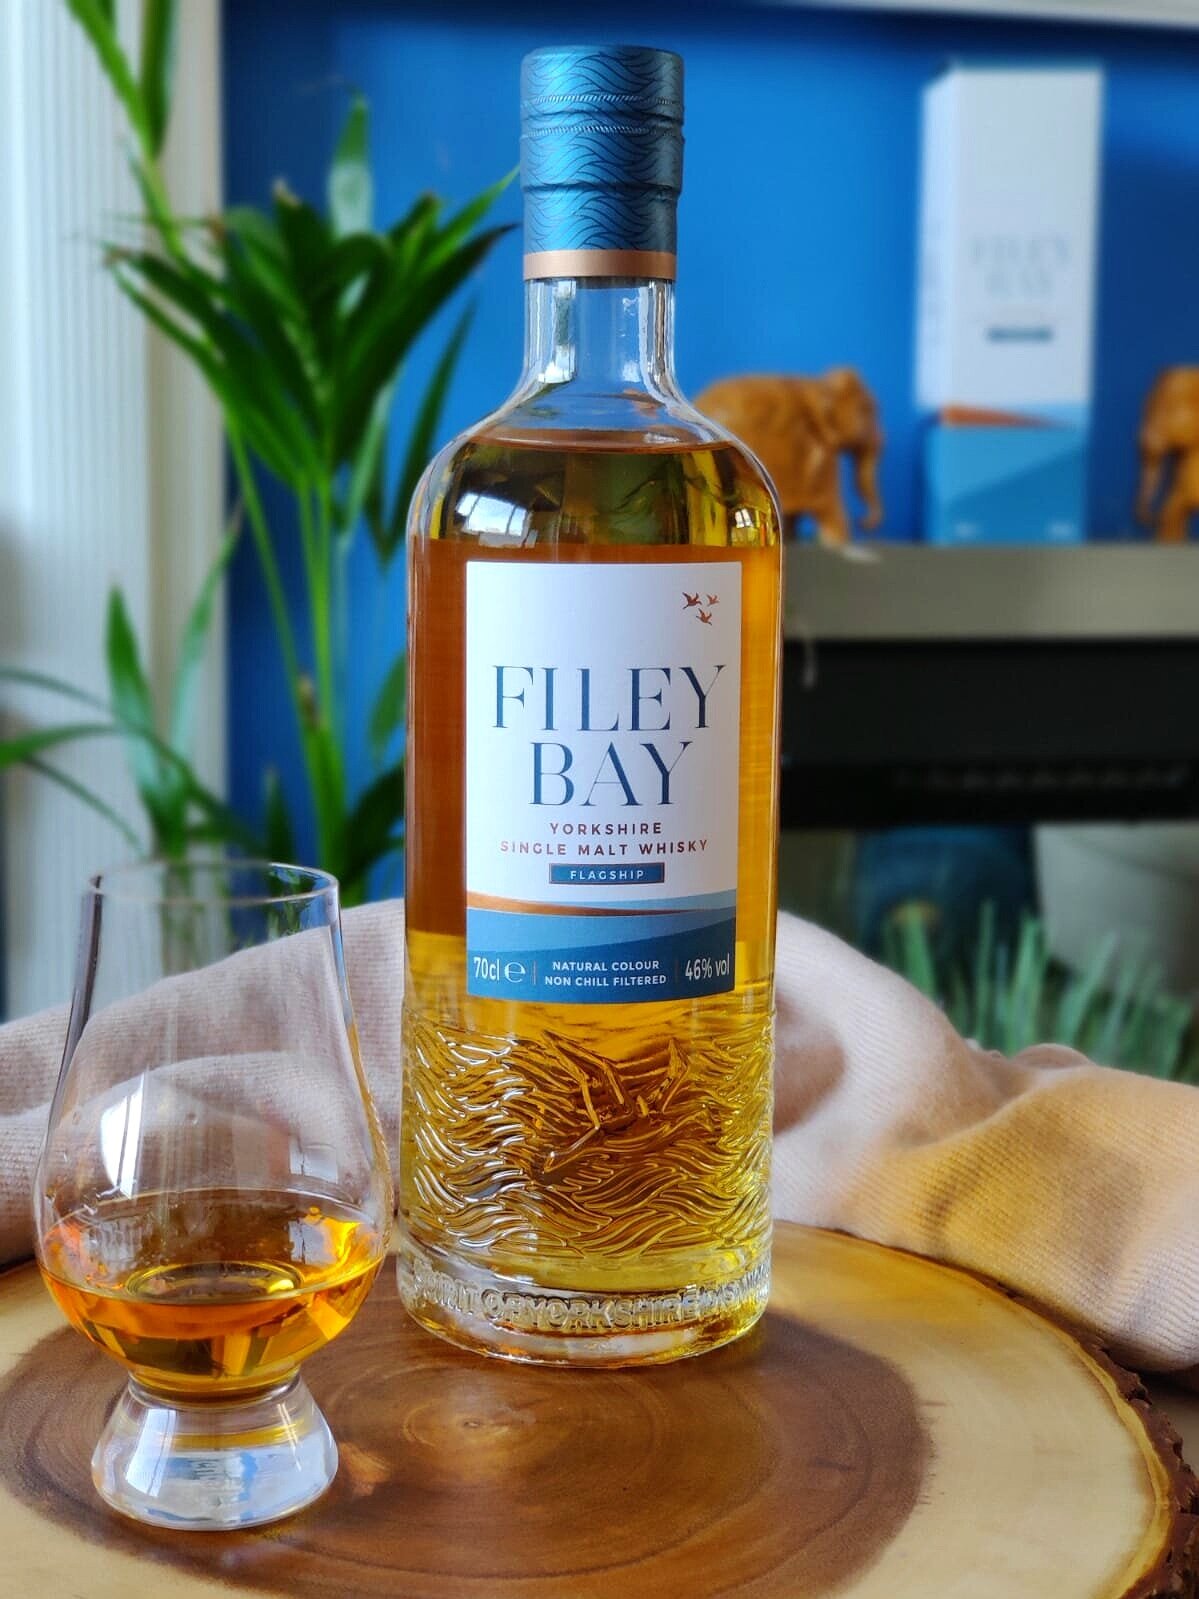 Filey bay whisky